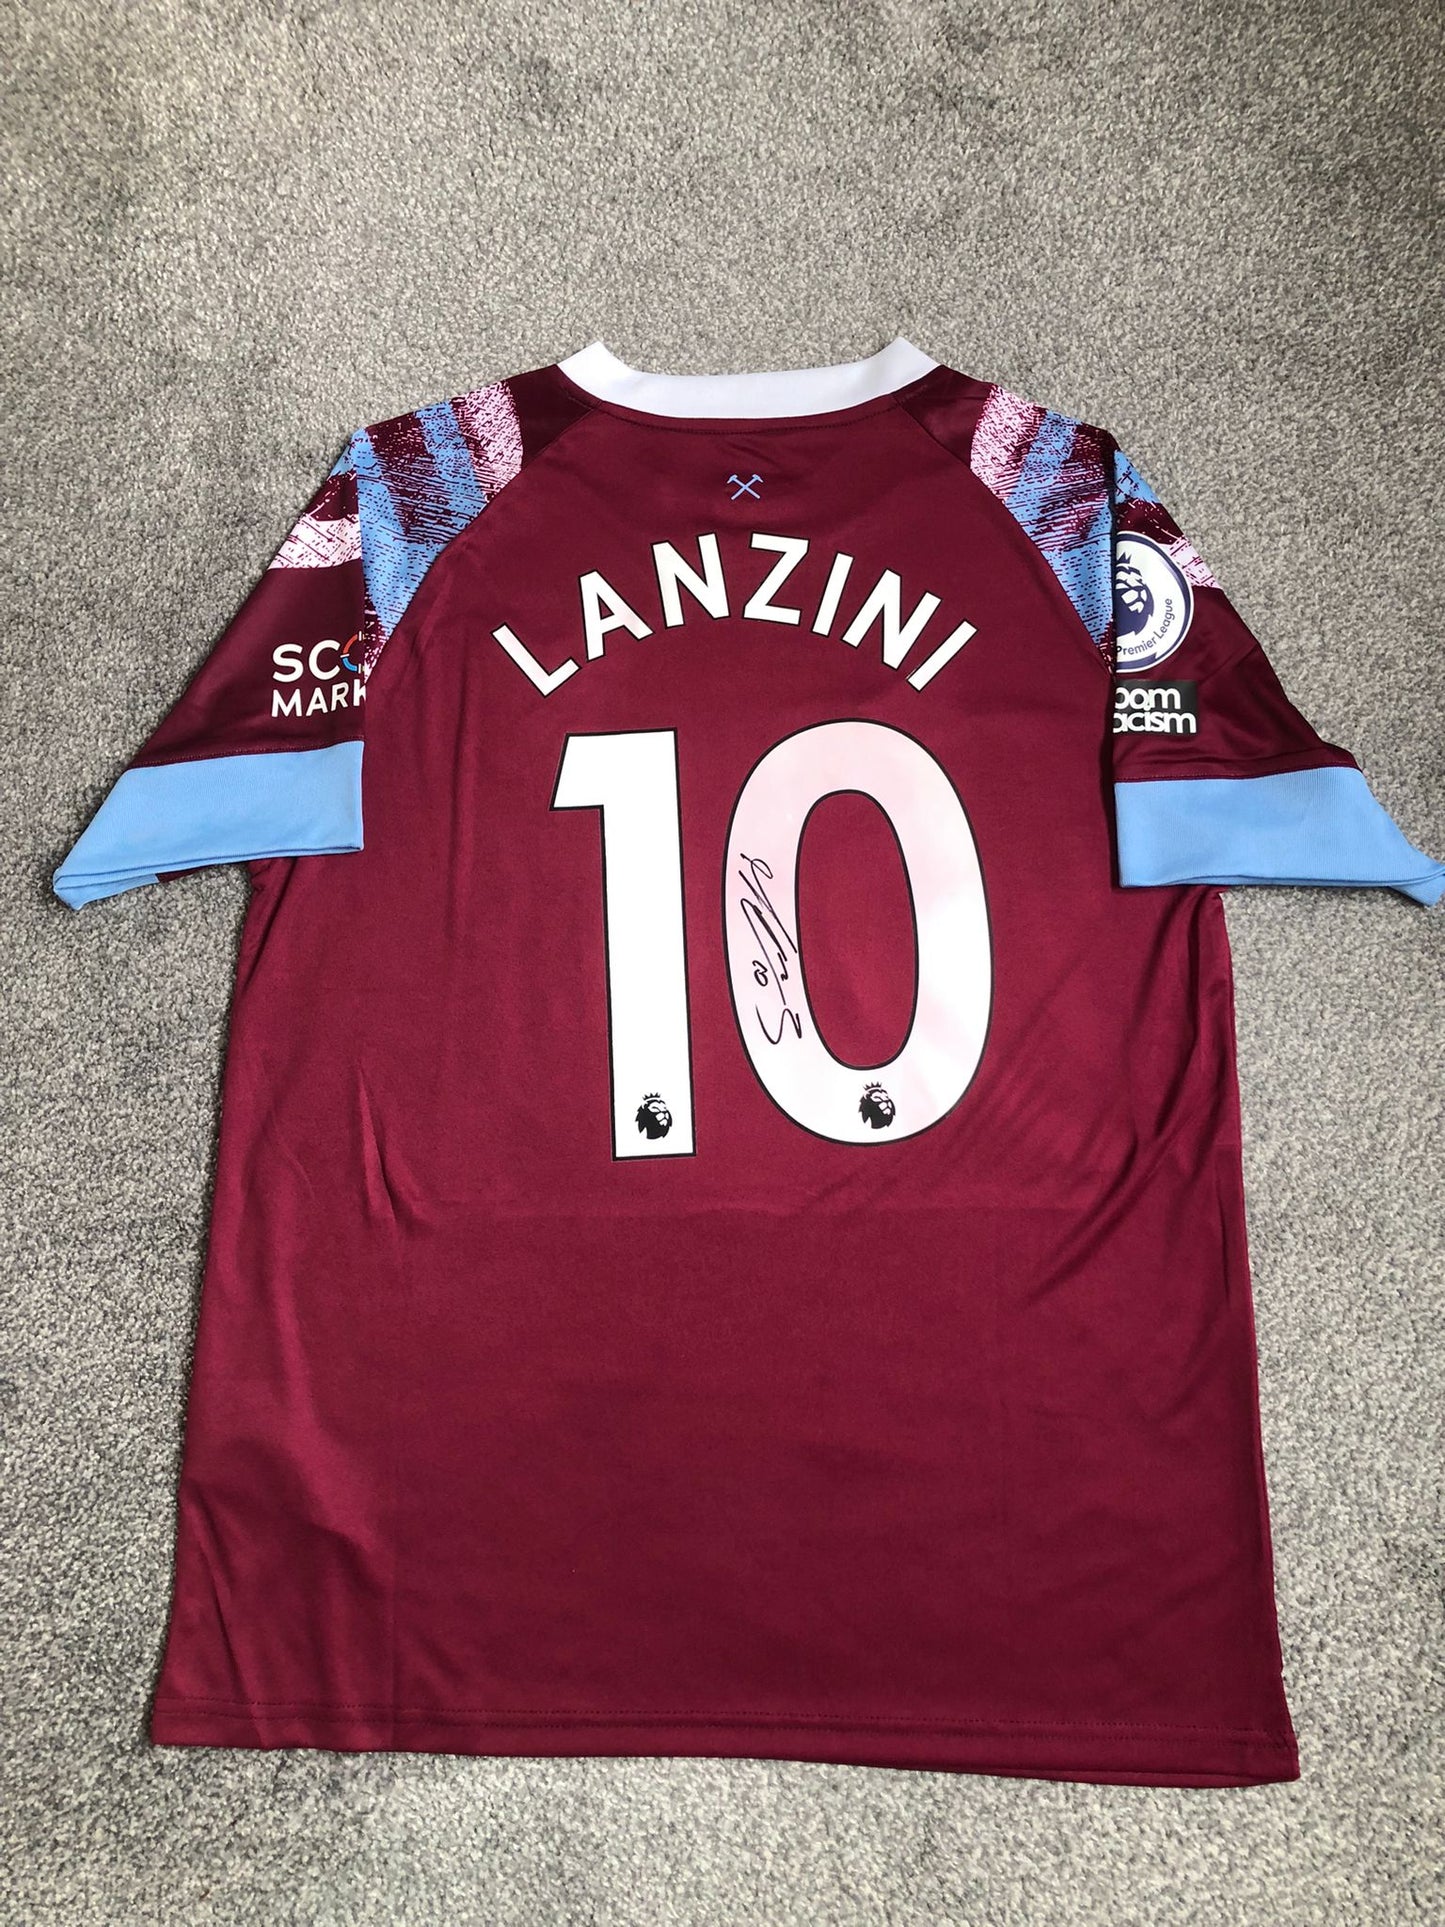 Signed Lanzini West Ham Home Shirt 22/23